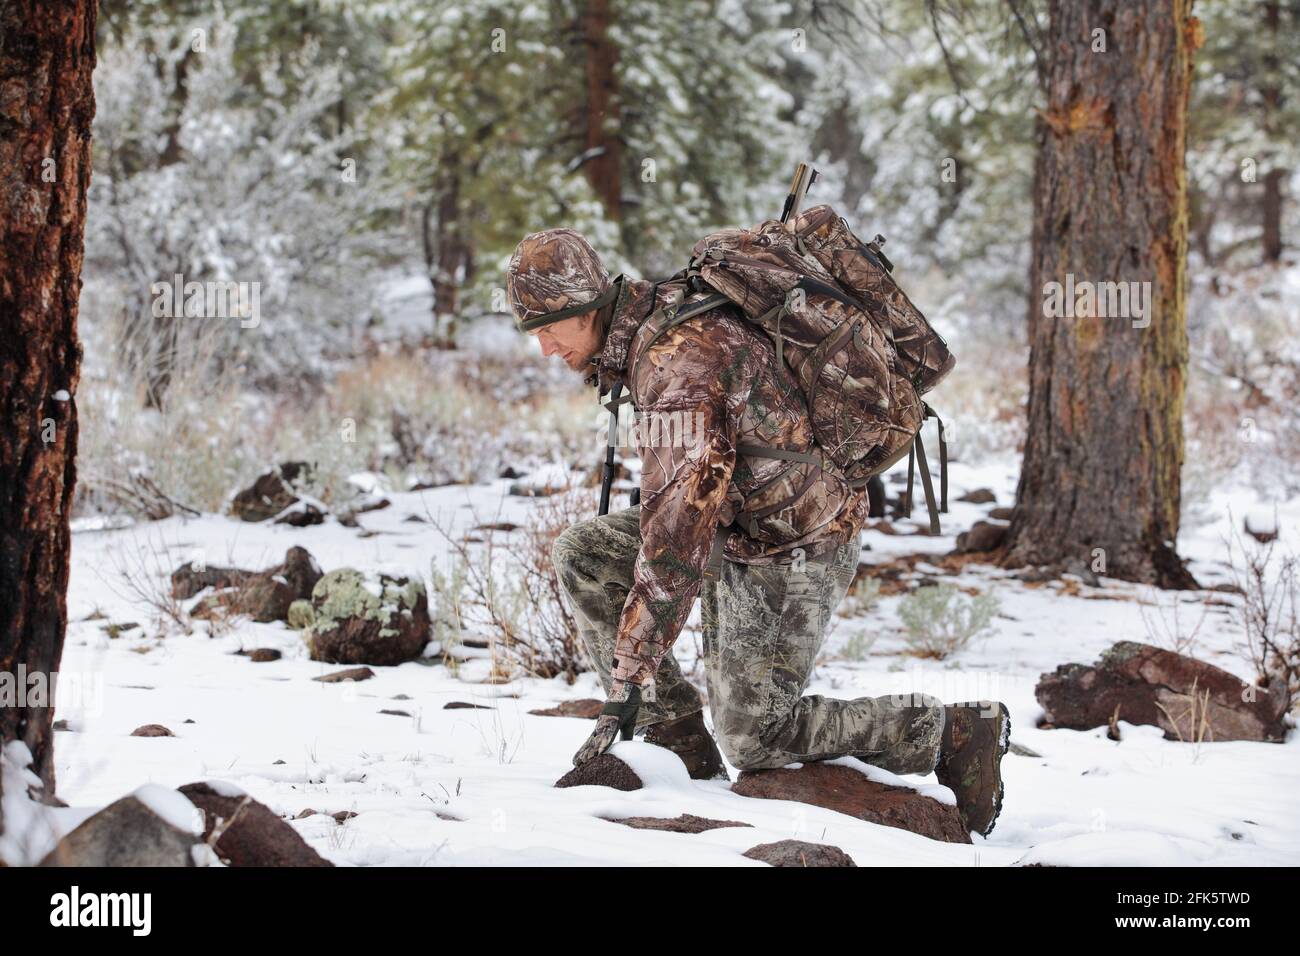 gun hunter in snowy scene kneeling to inspect deer tracks Stock Photo